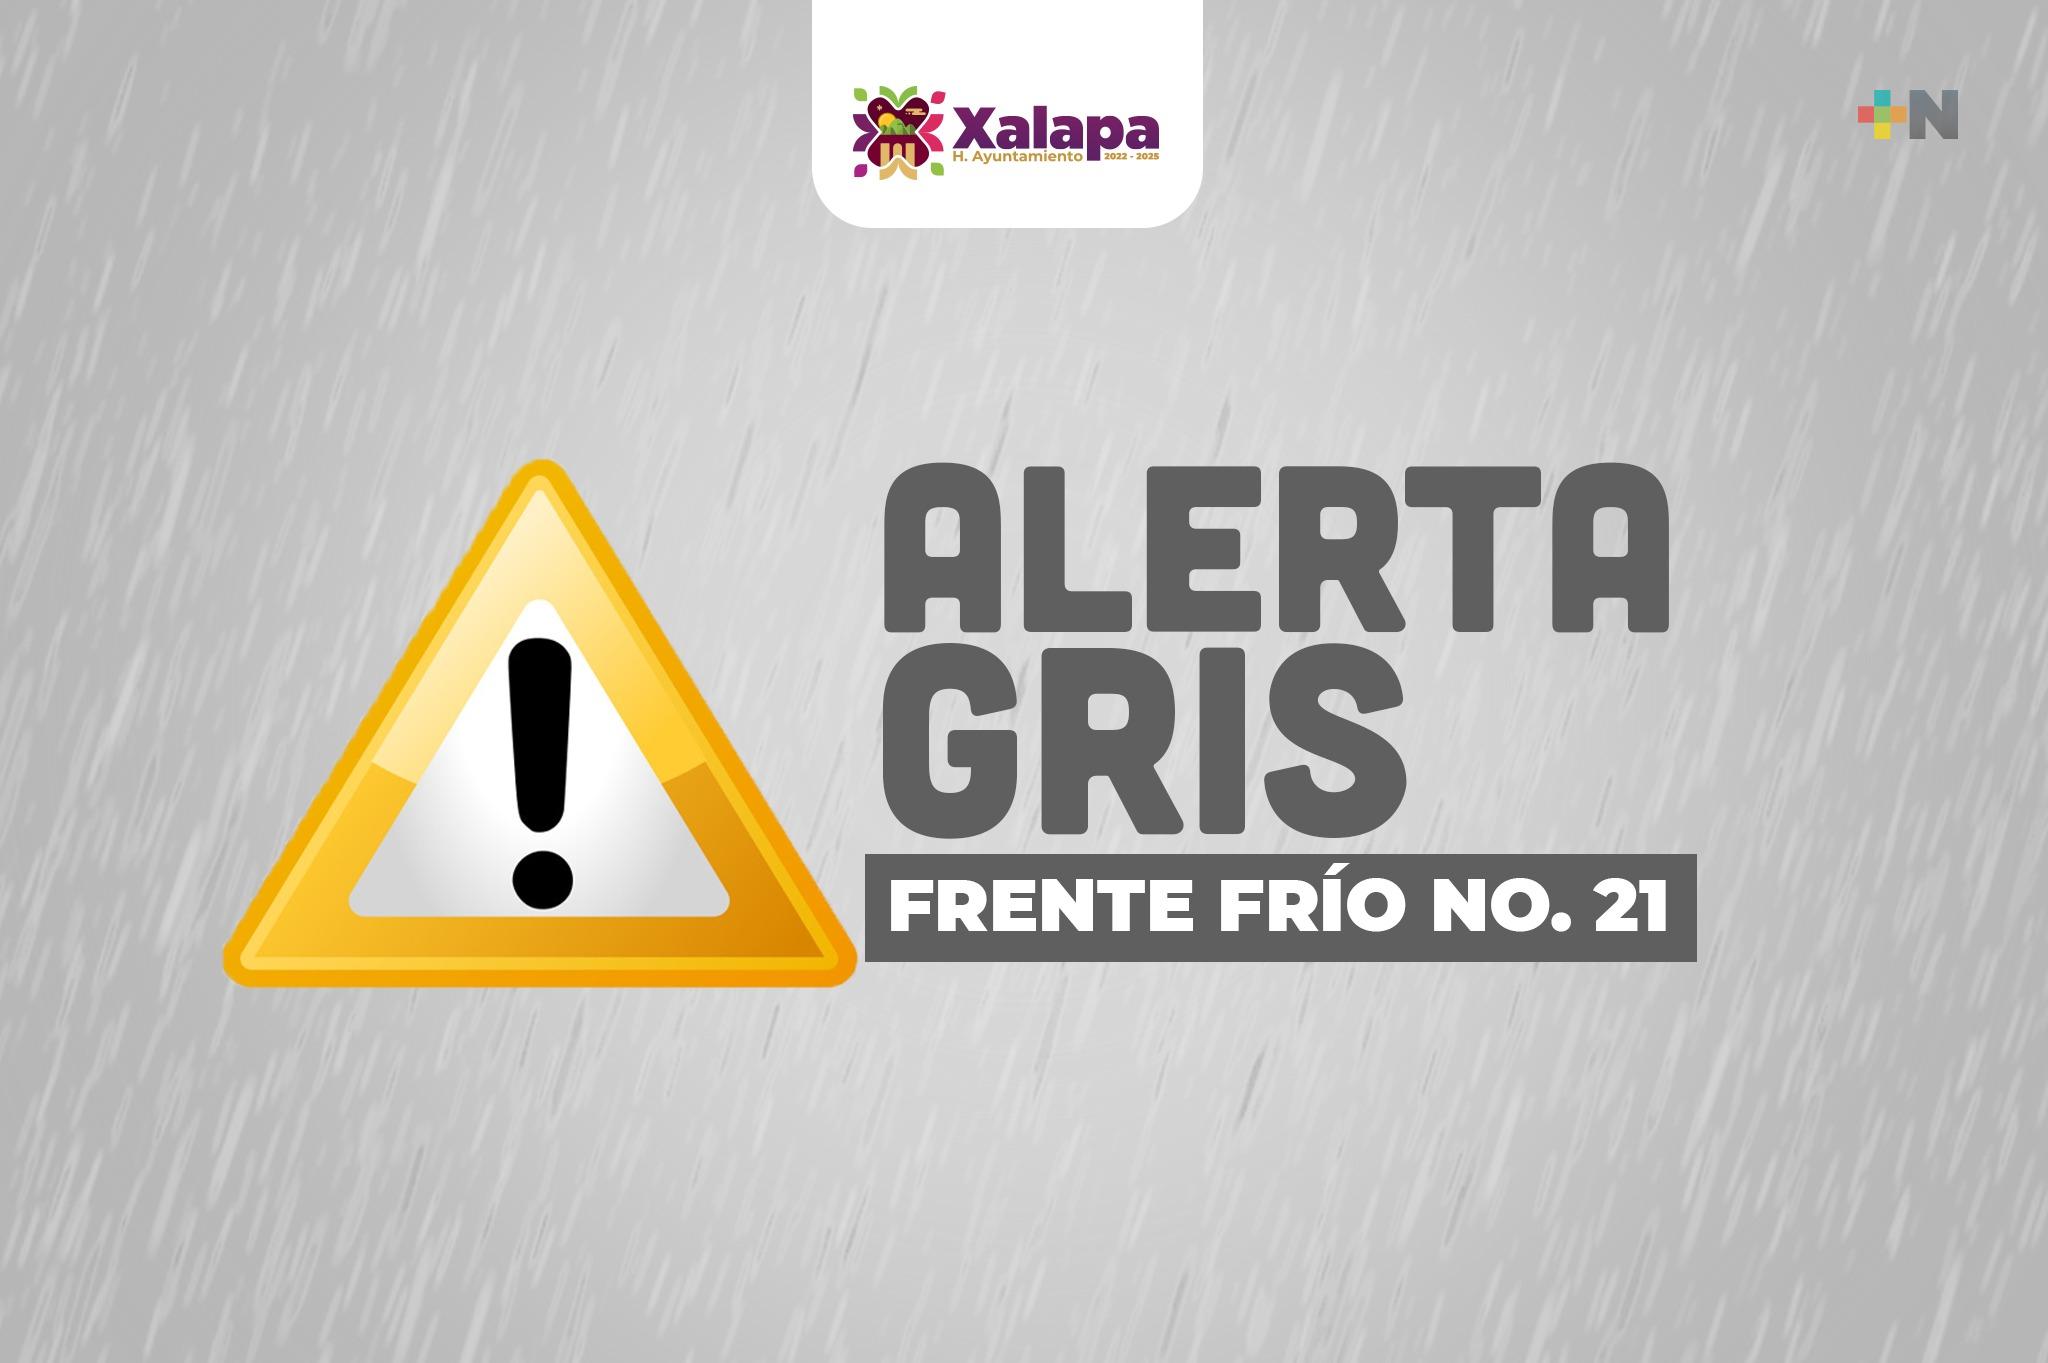 Xalapa emite Alerta Gris ante Frente Frío #21